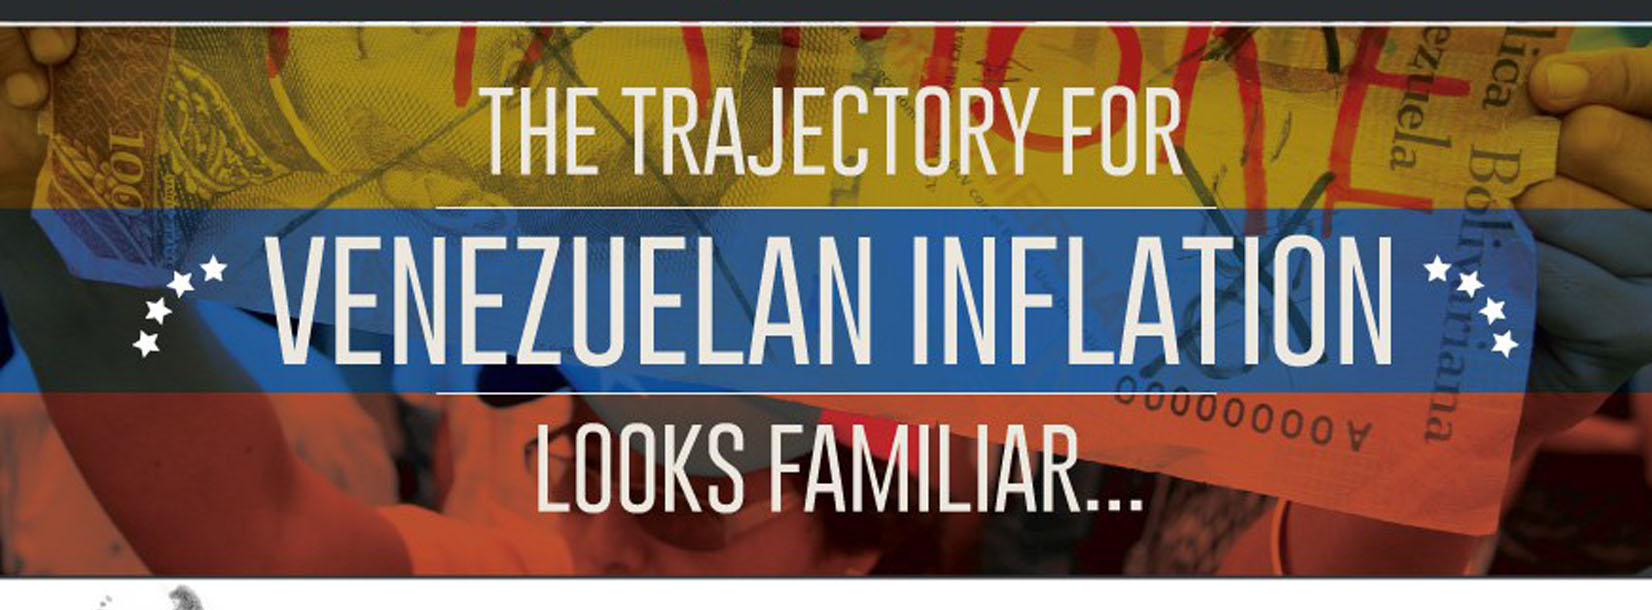 The Trajectory of Venezuelan Hyperinflation Looks Familiar…